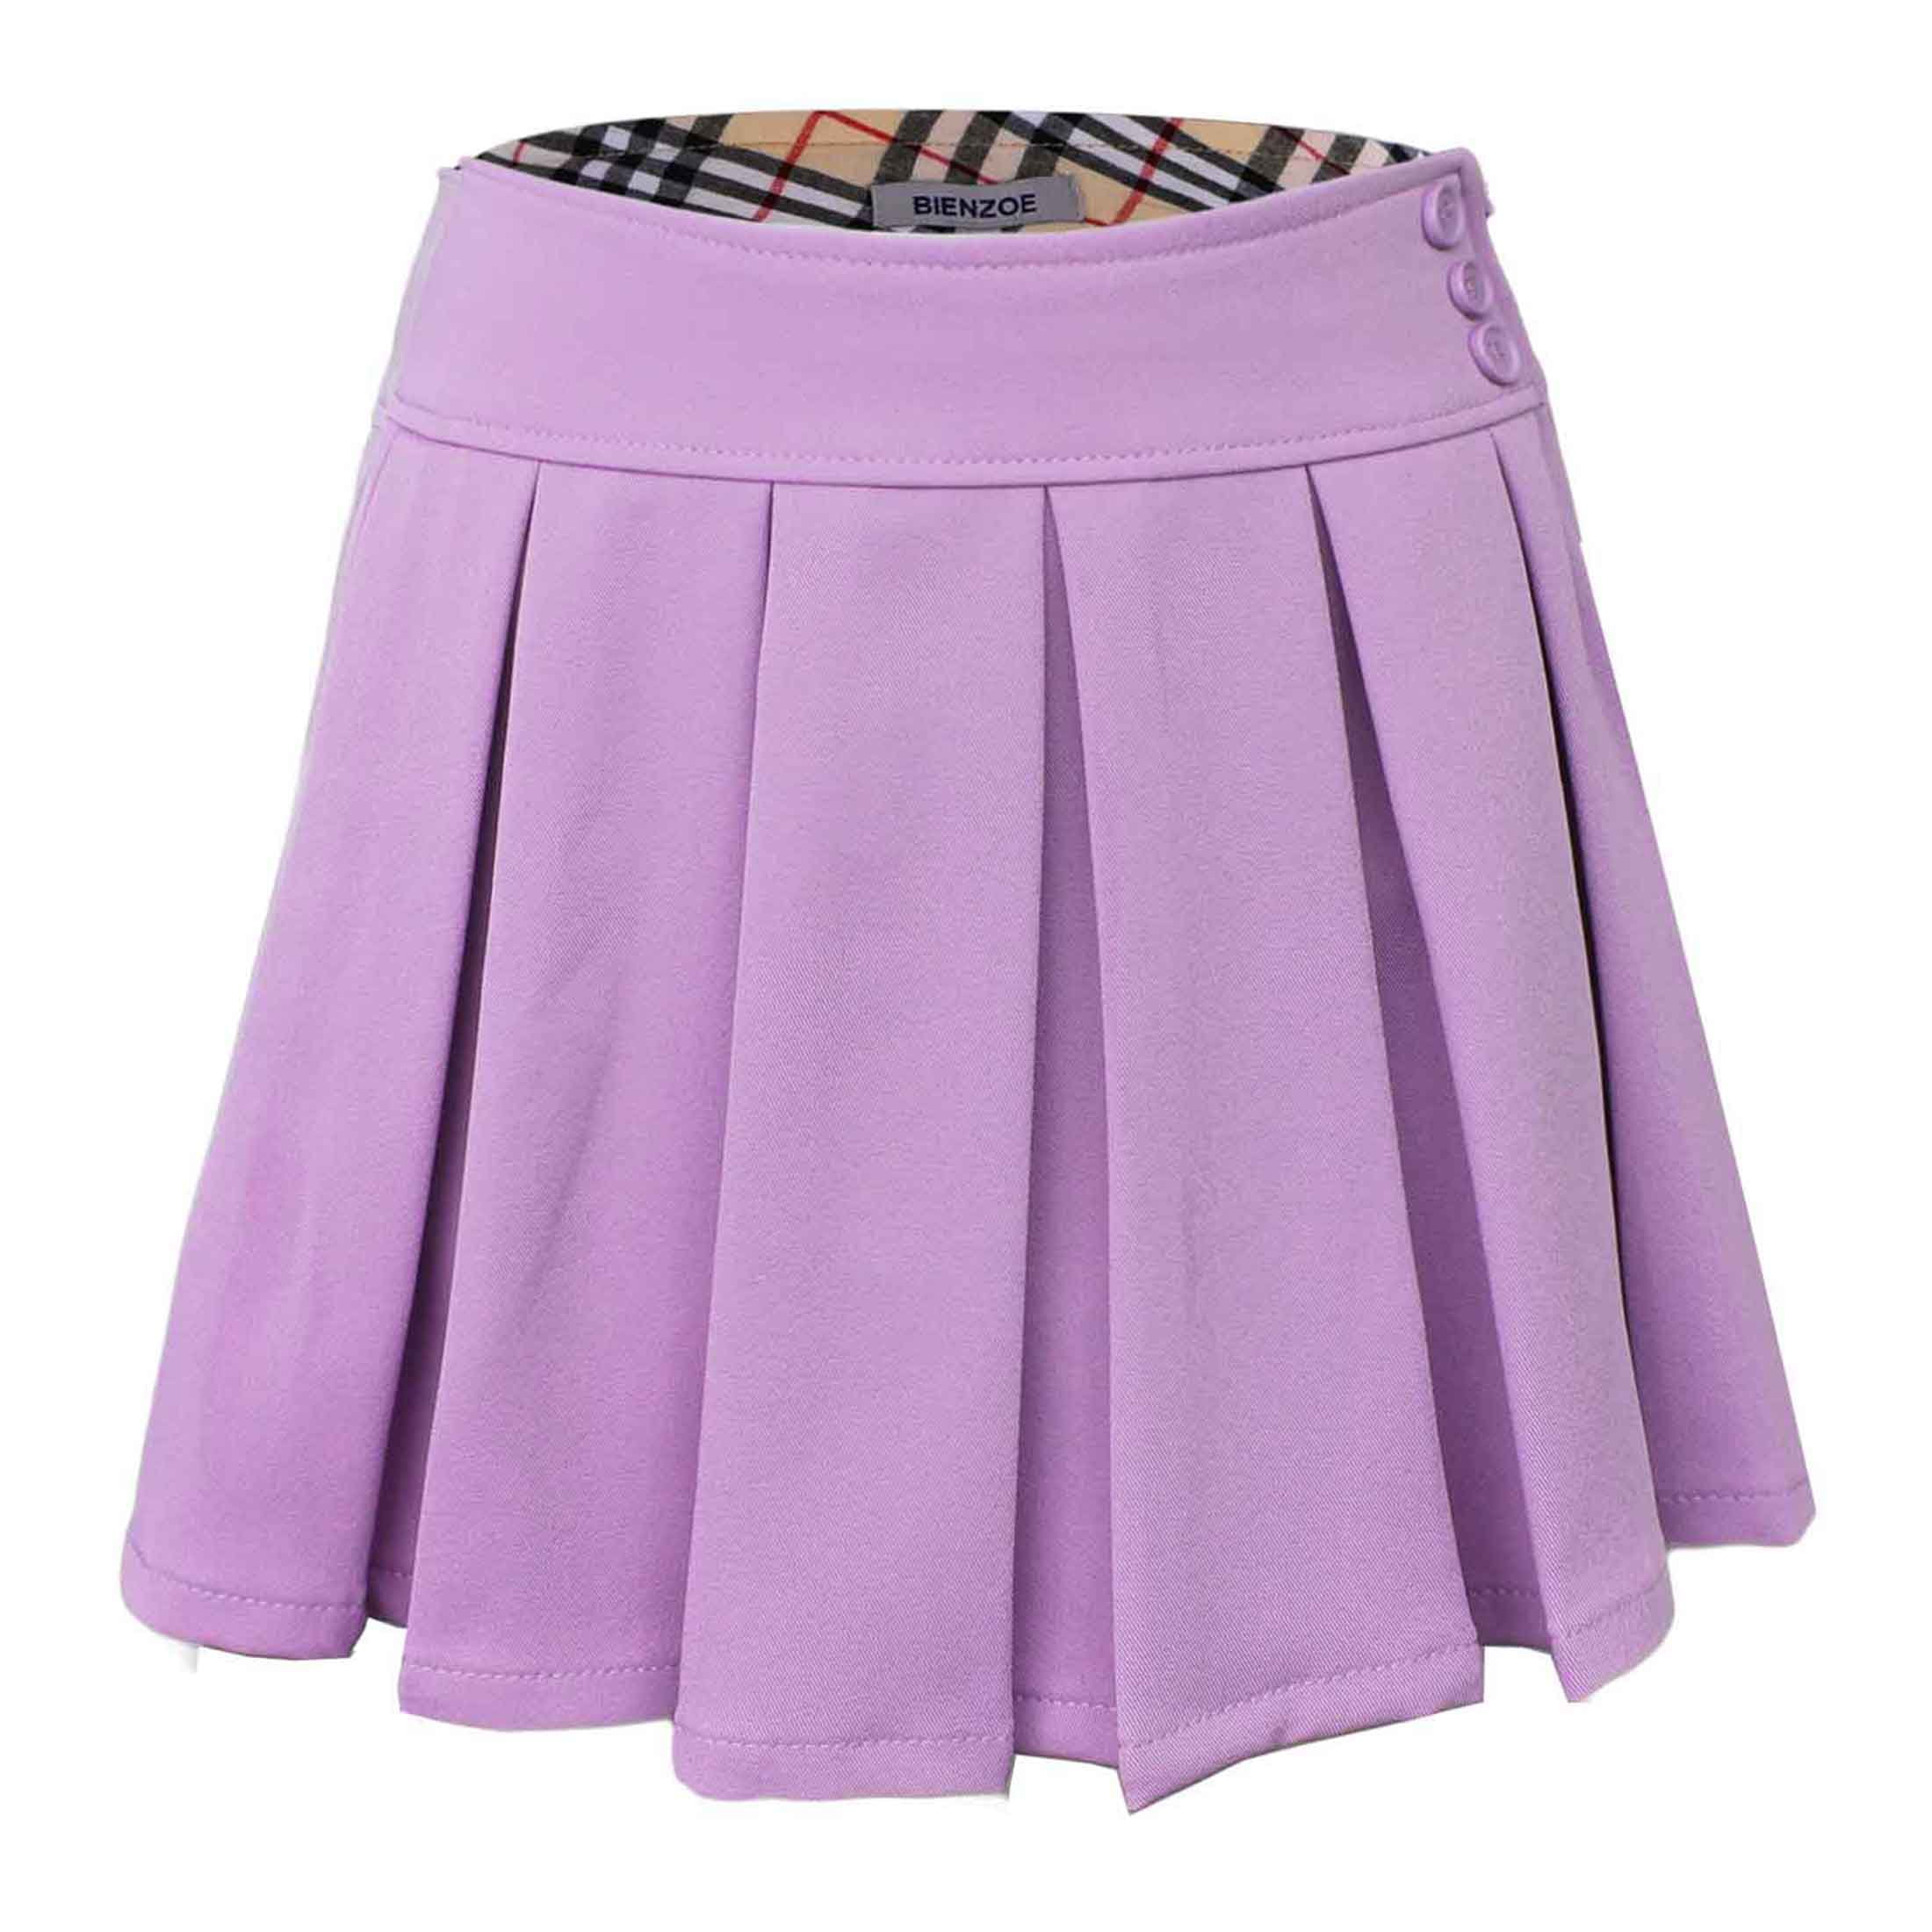 Bienzoe Girl's Classical Pleated School Uniform Dance Skirt 